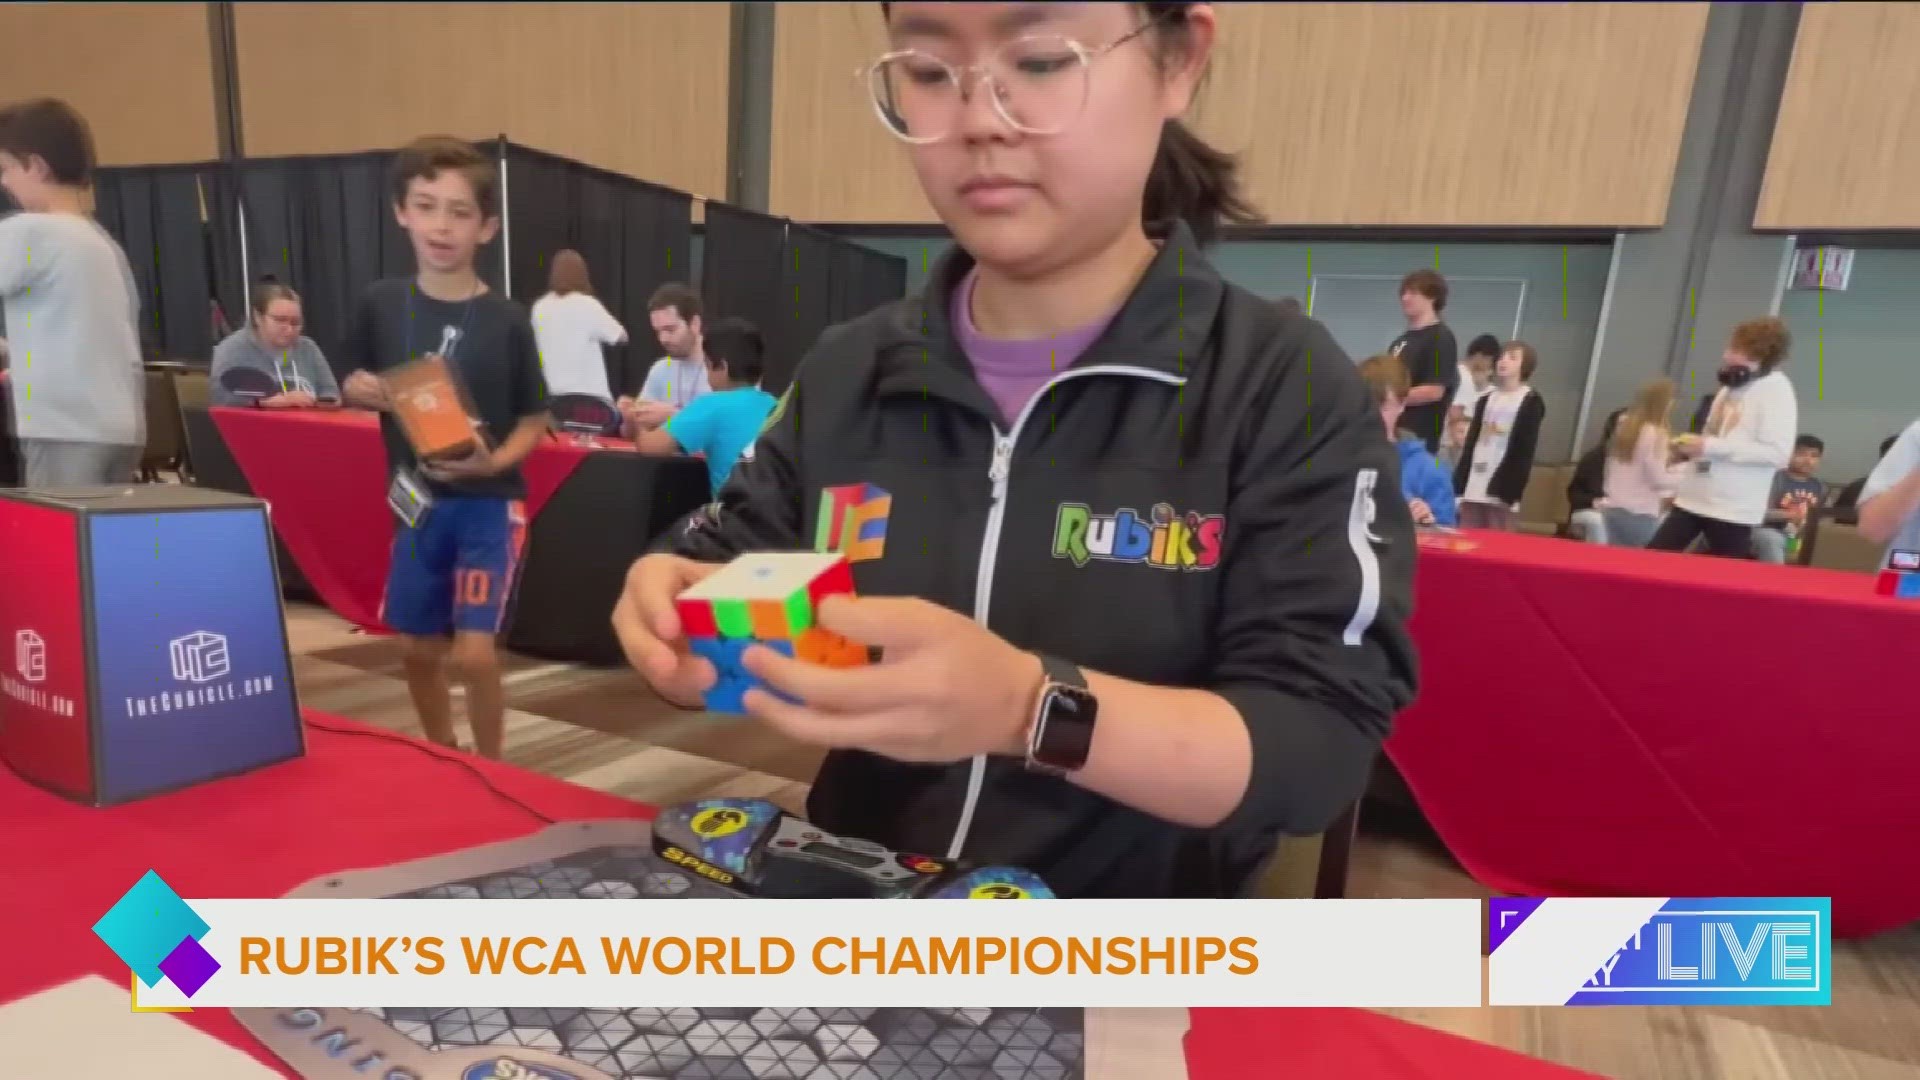 Live stream – WCA World Championship 2021